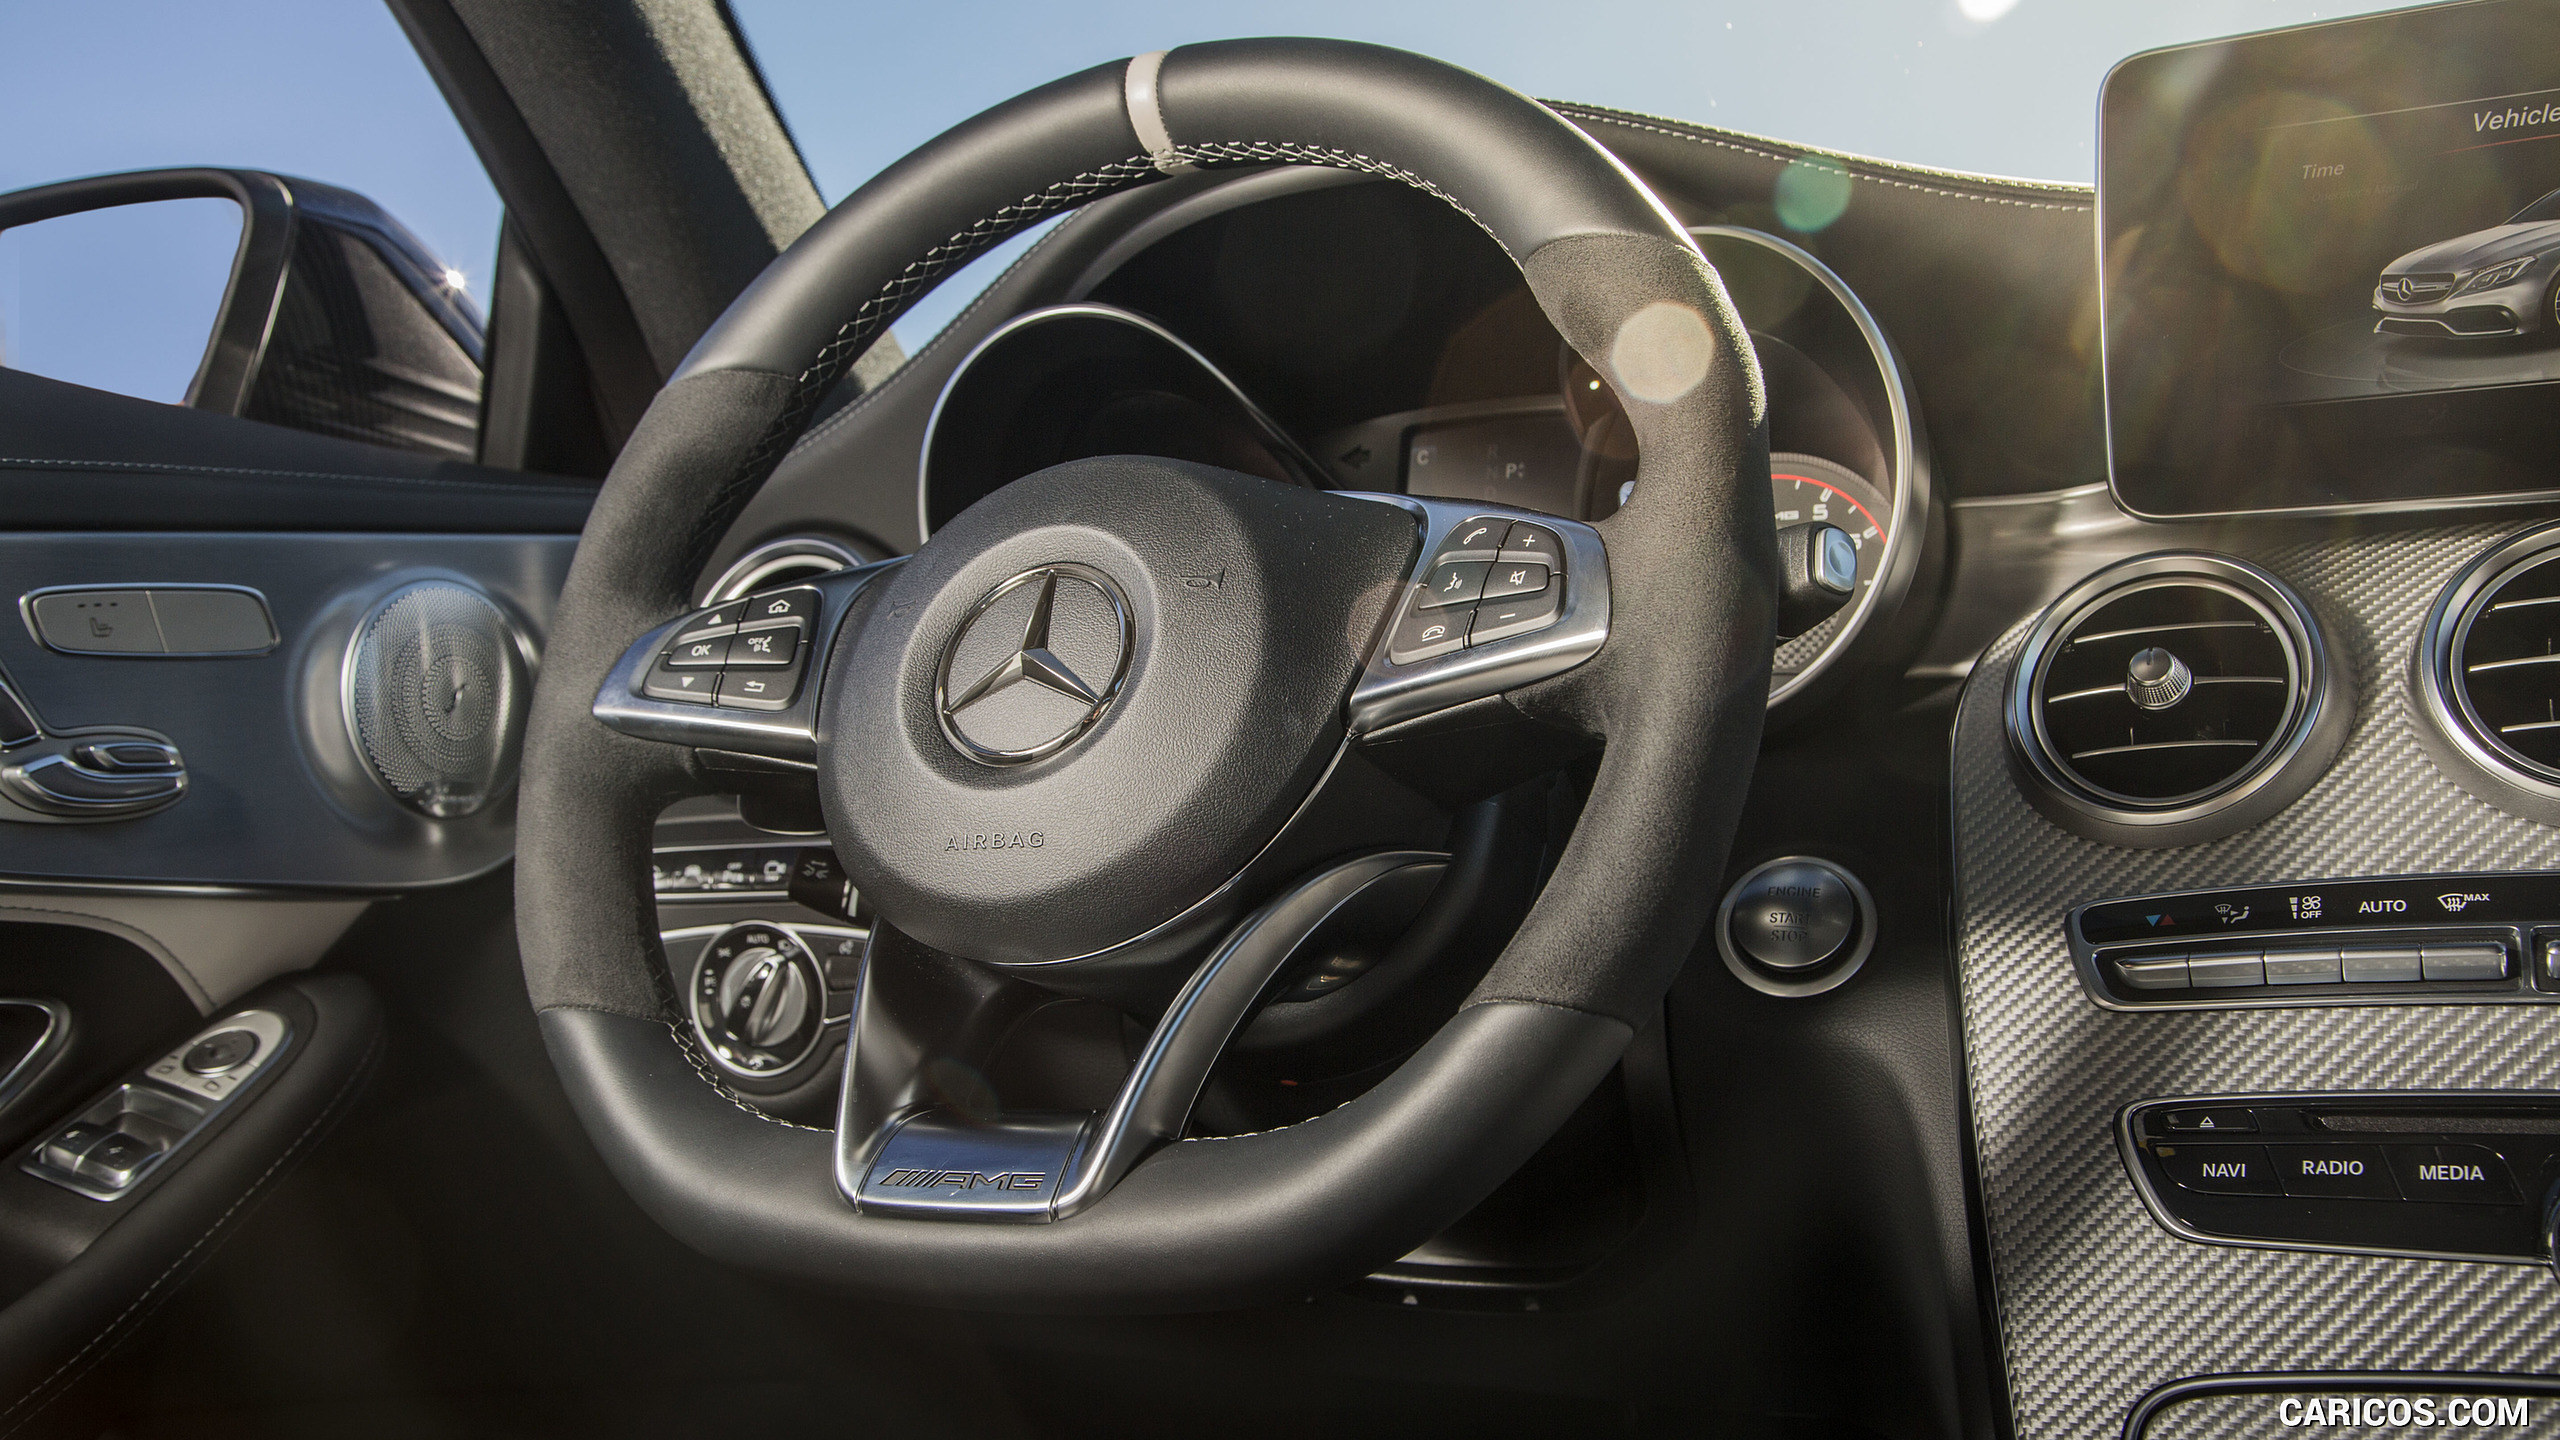 2017 Mercedes-AMG C63 S Coupe (US-Spec) - Interior, Steering Wheel, #93 of 107